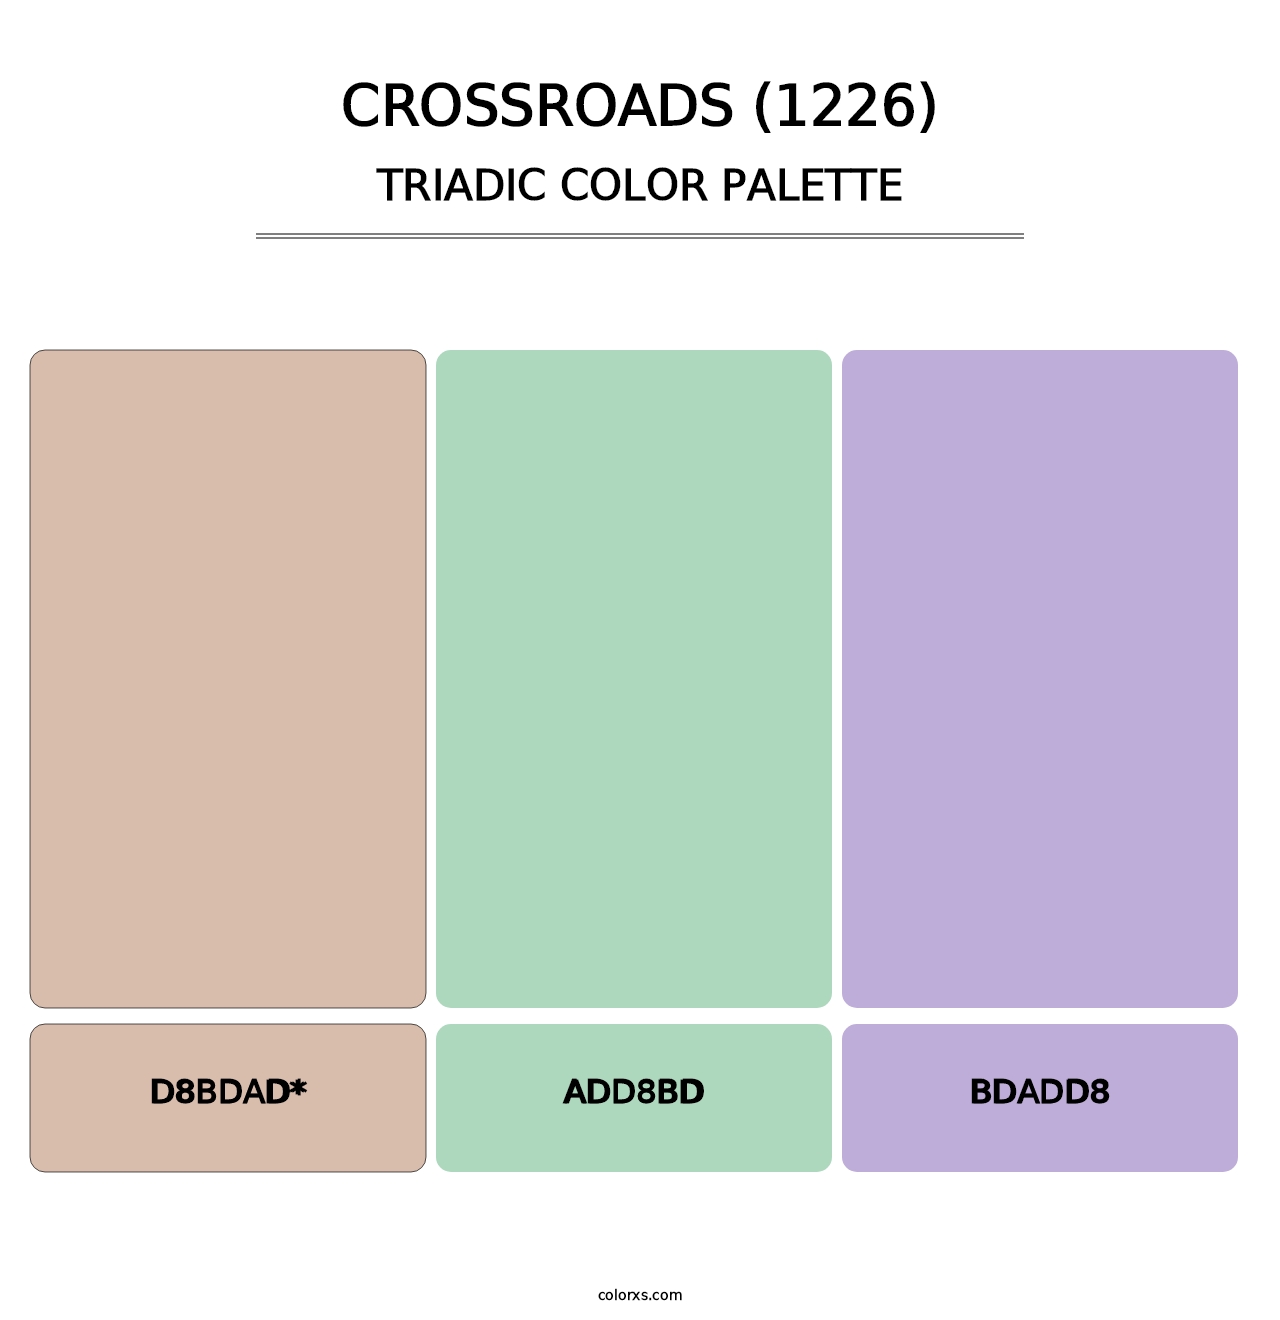 Crossroads (1226) - Triadic Color Palette